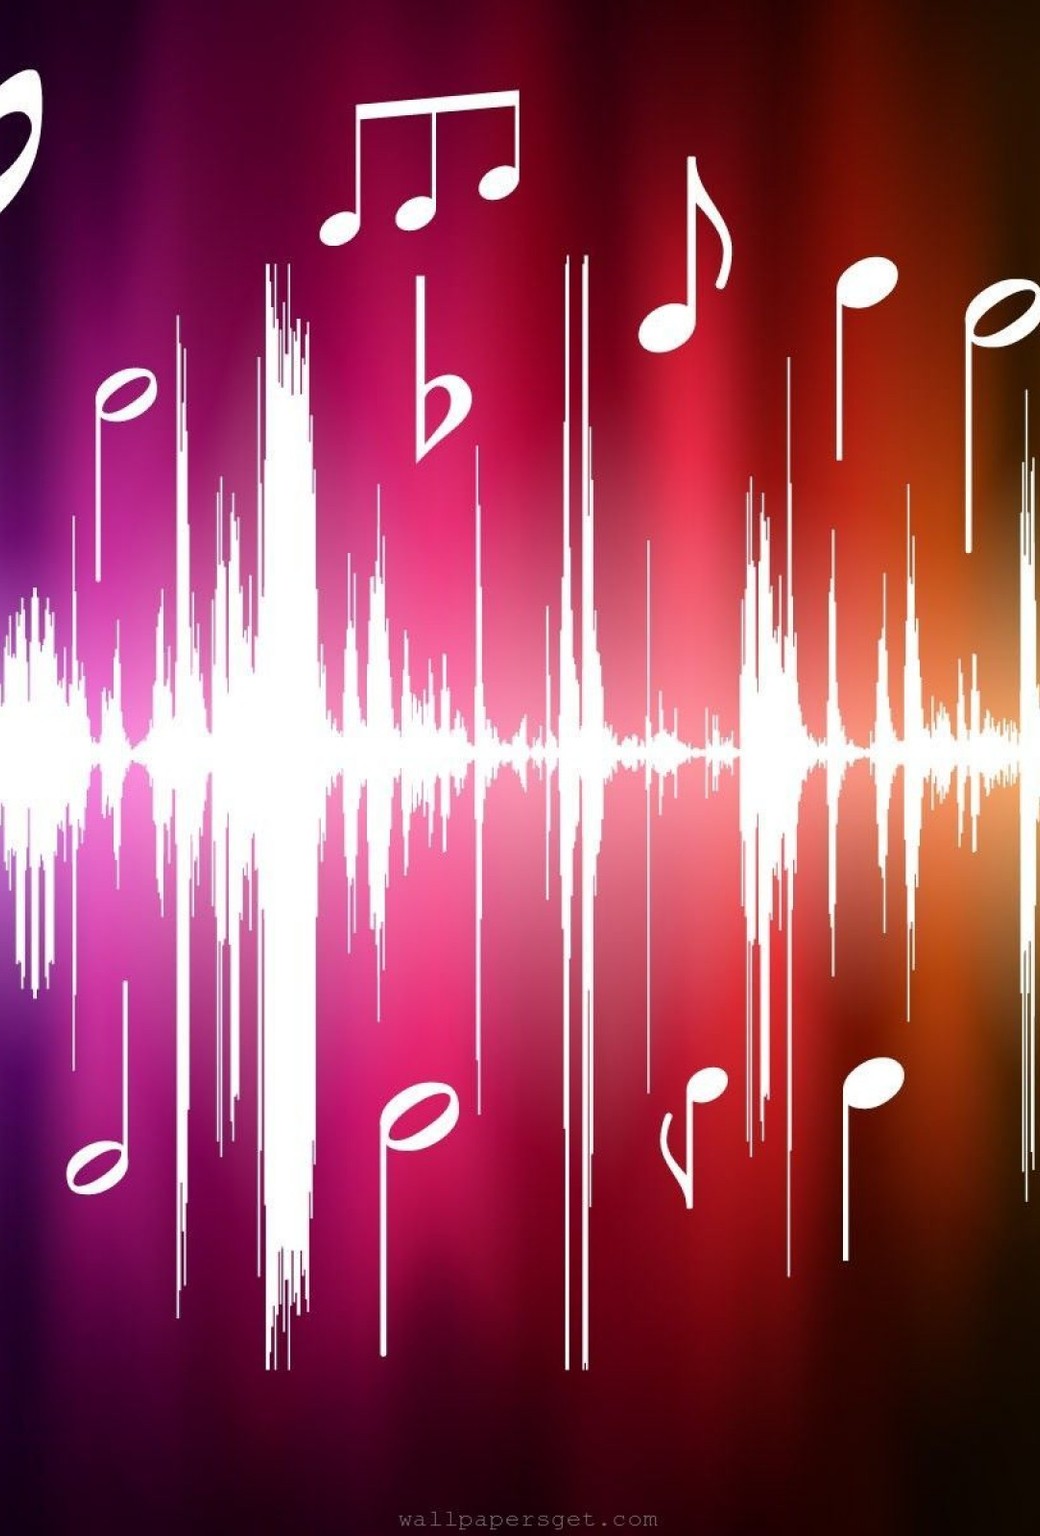 soundwaves of music